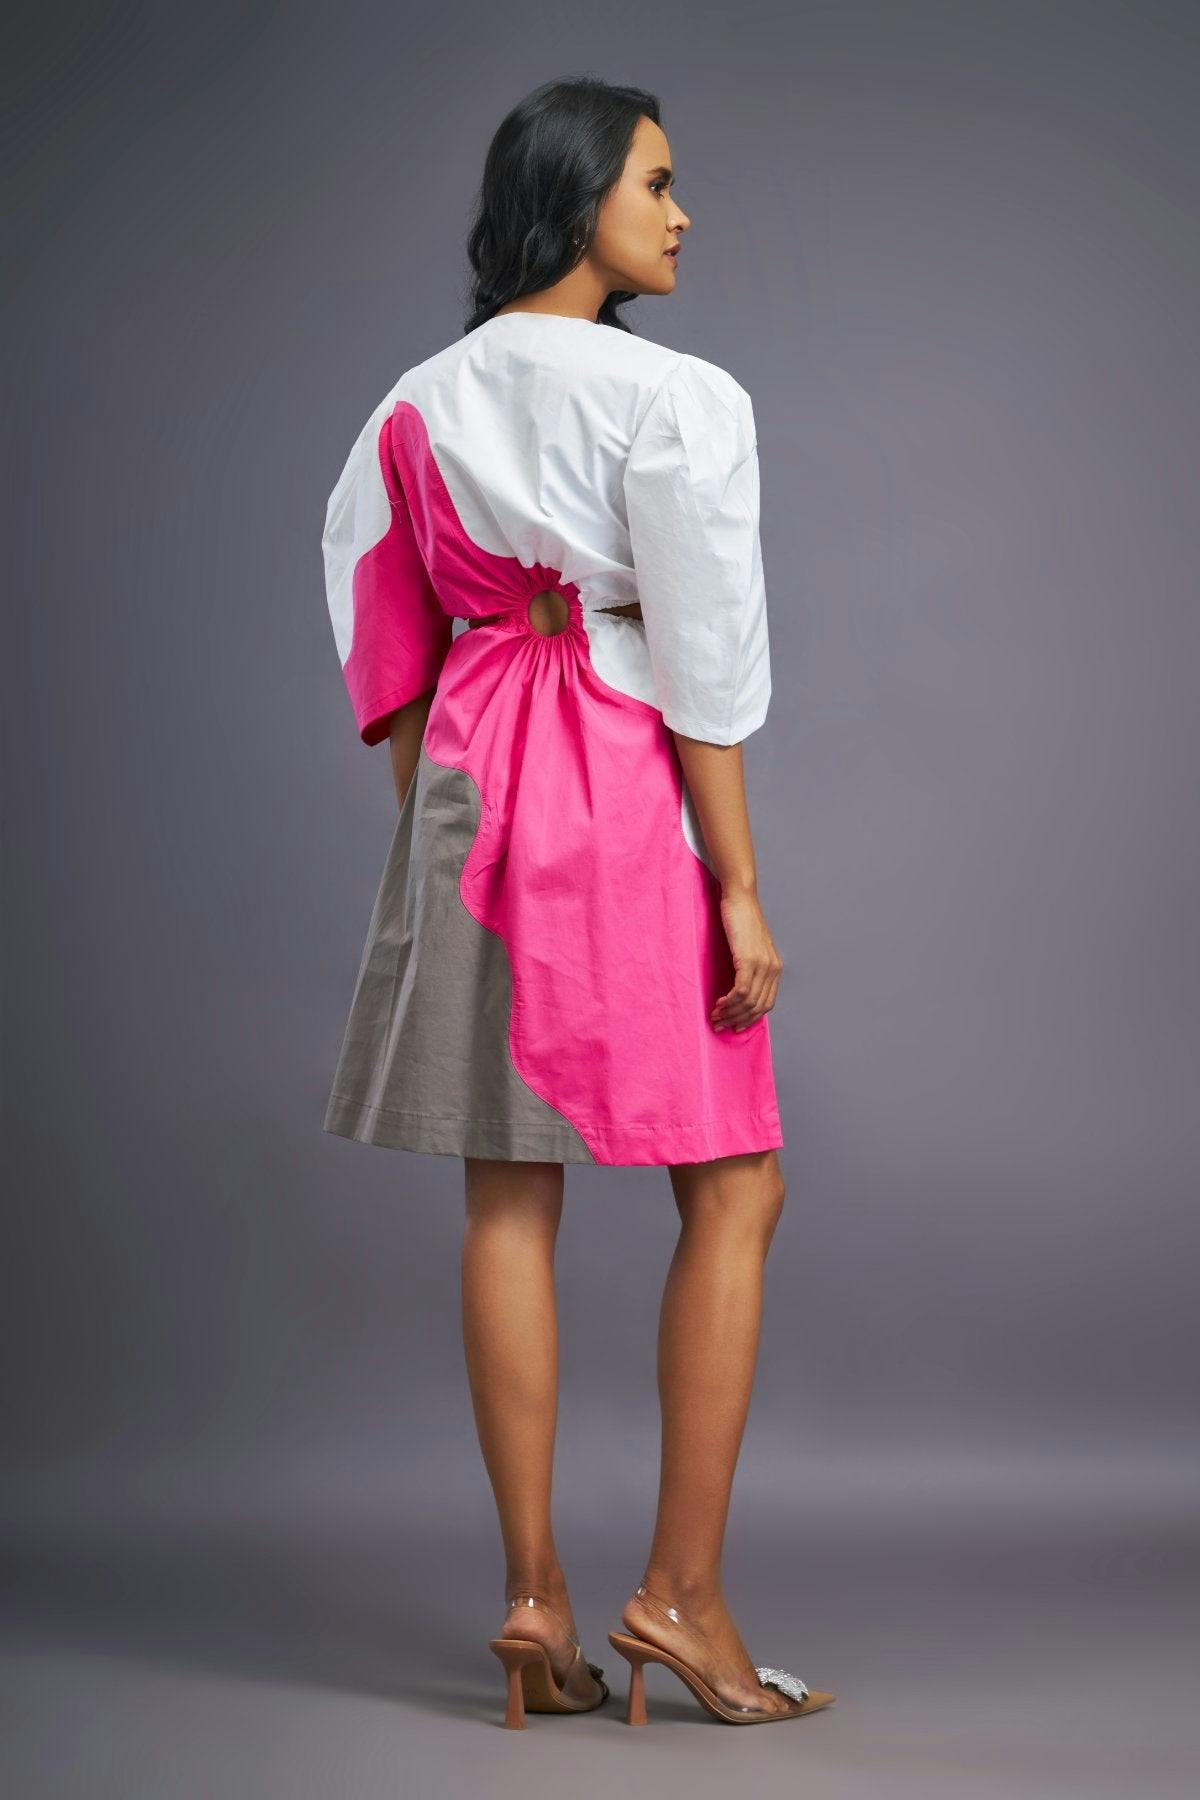 Thumbnail preview #2 for BB-1106-PG - White Pink Cutout Dress